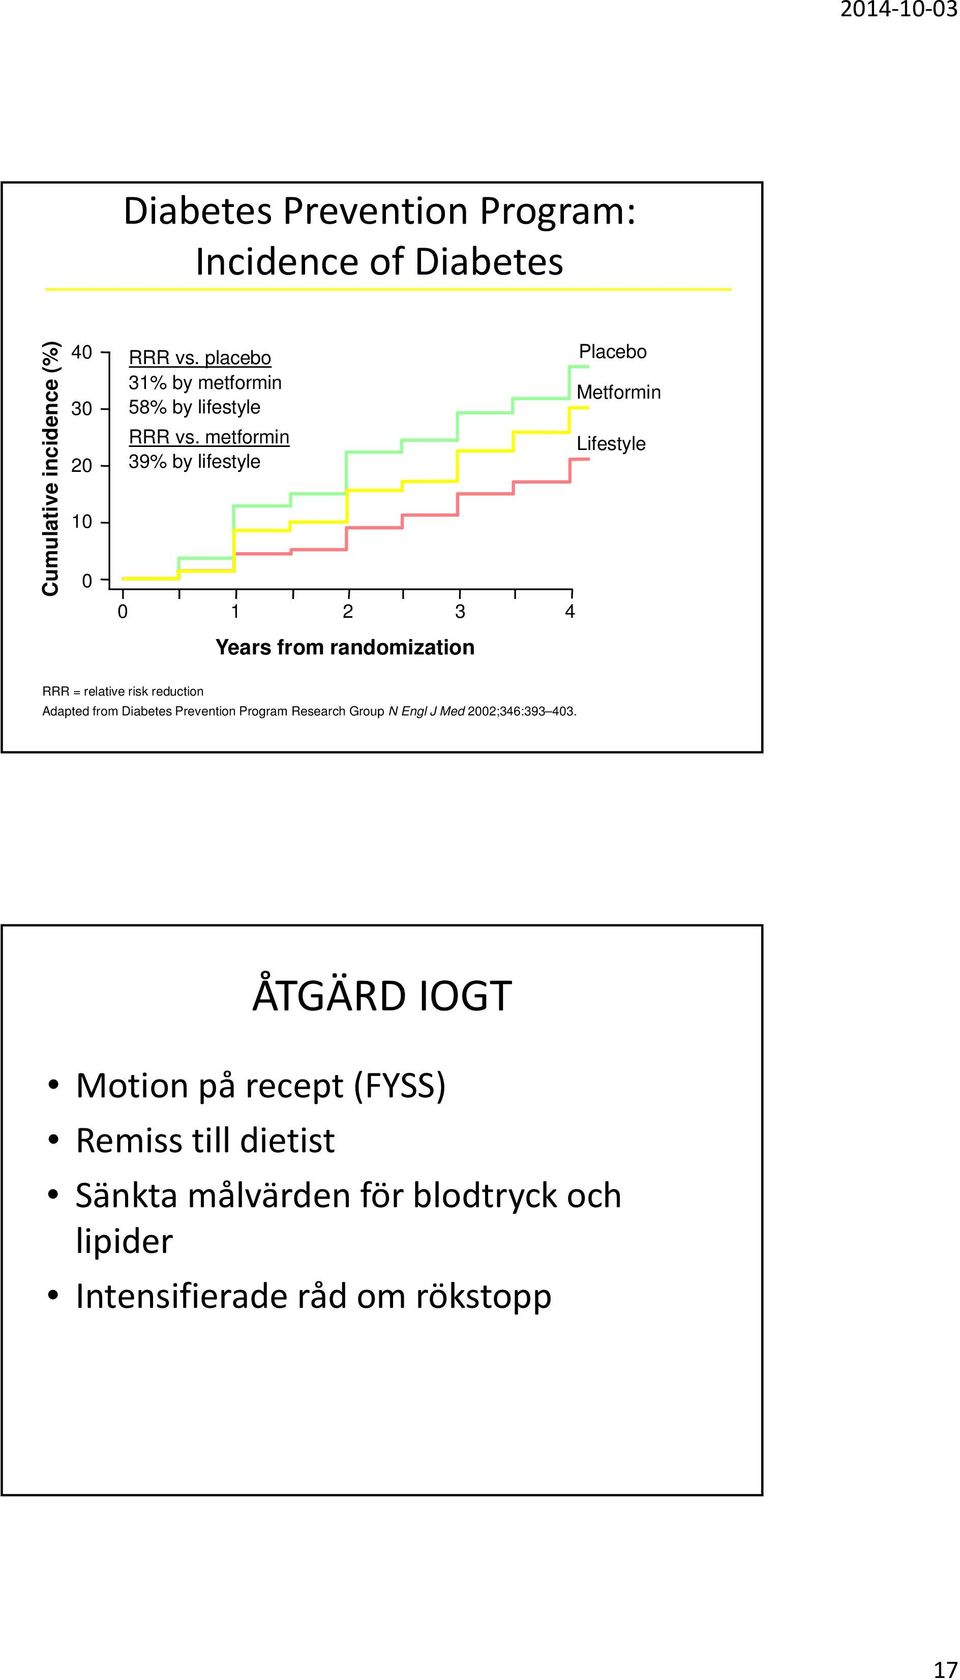 metformin 39% by lifestyle 0 1 2 3 4 Years from randomization Placebo Metformin Lifestyle RRR = relative risk reduction